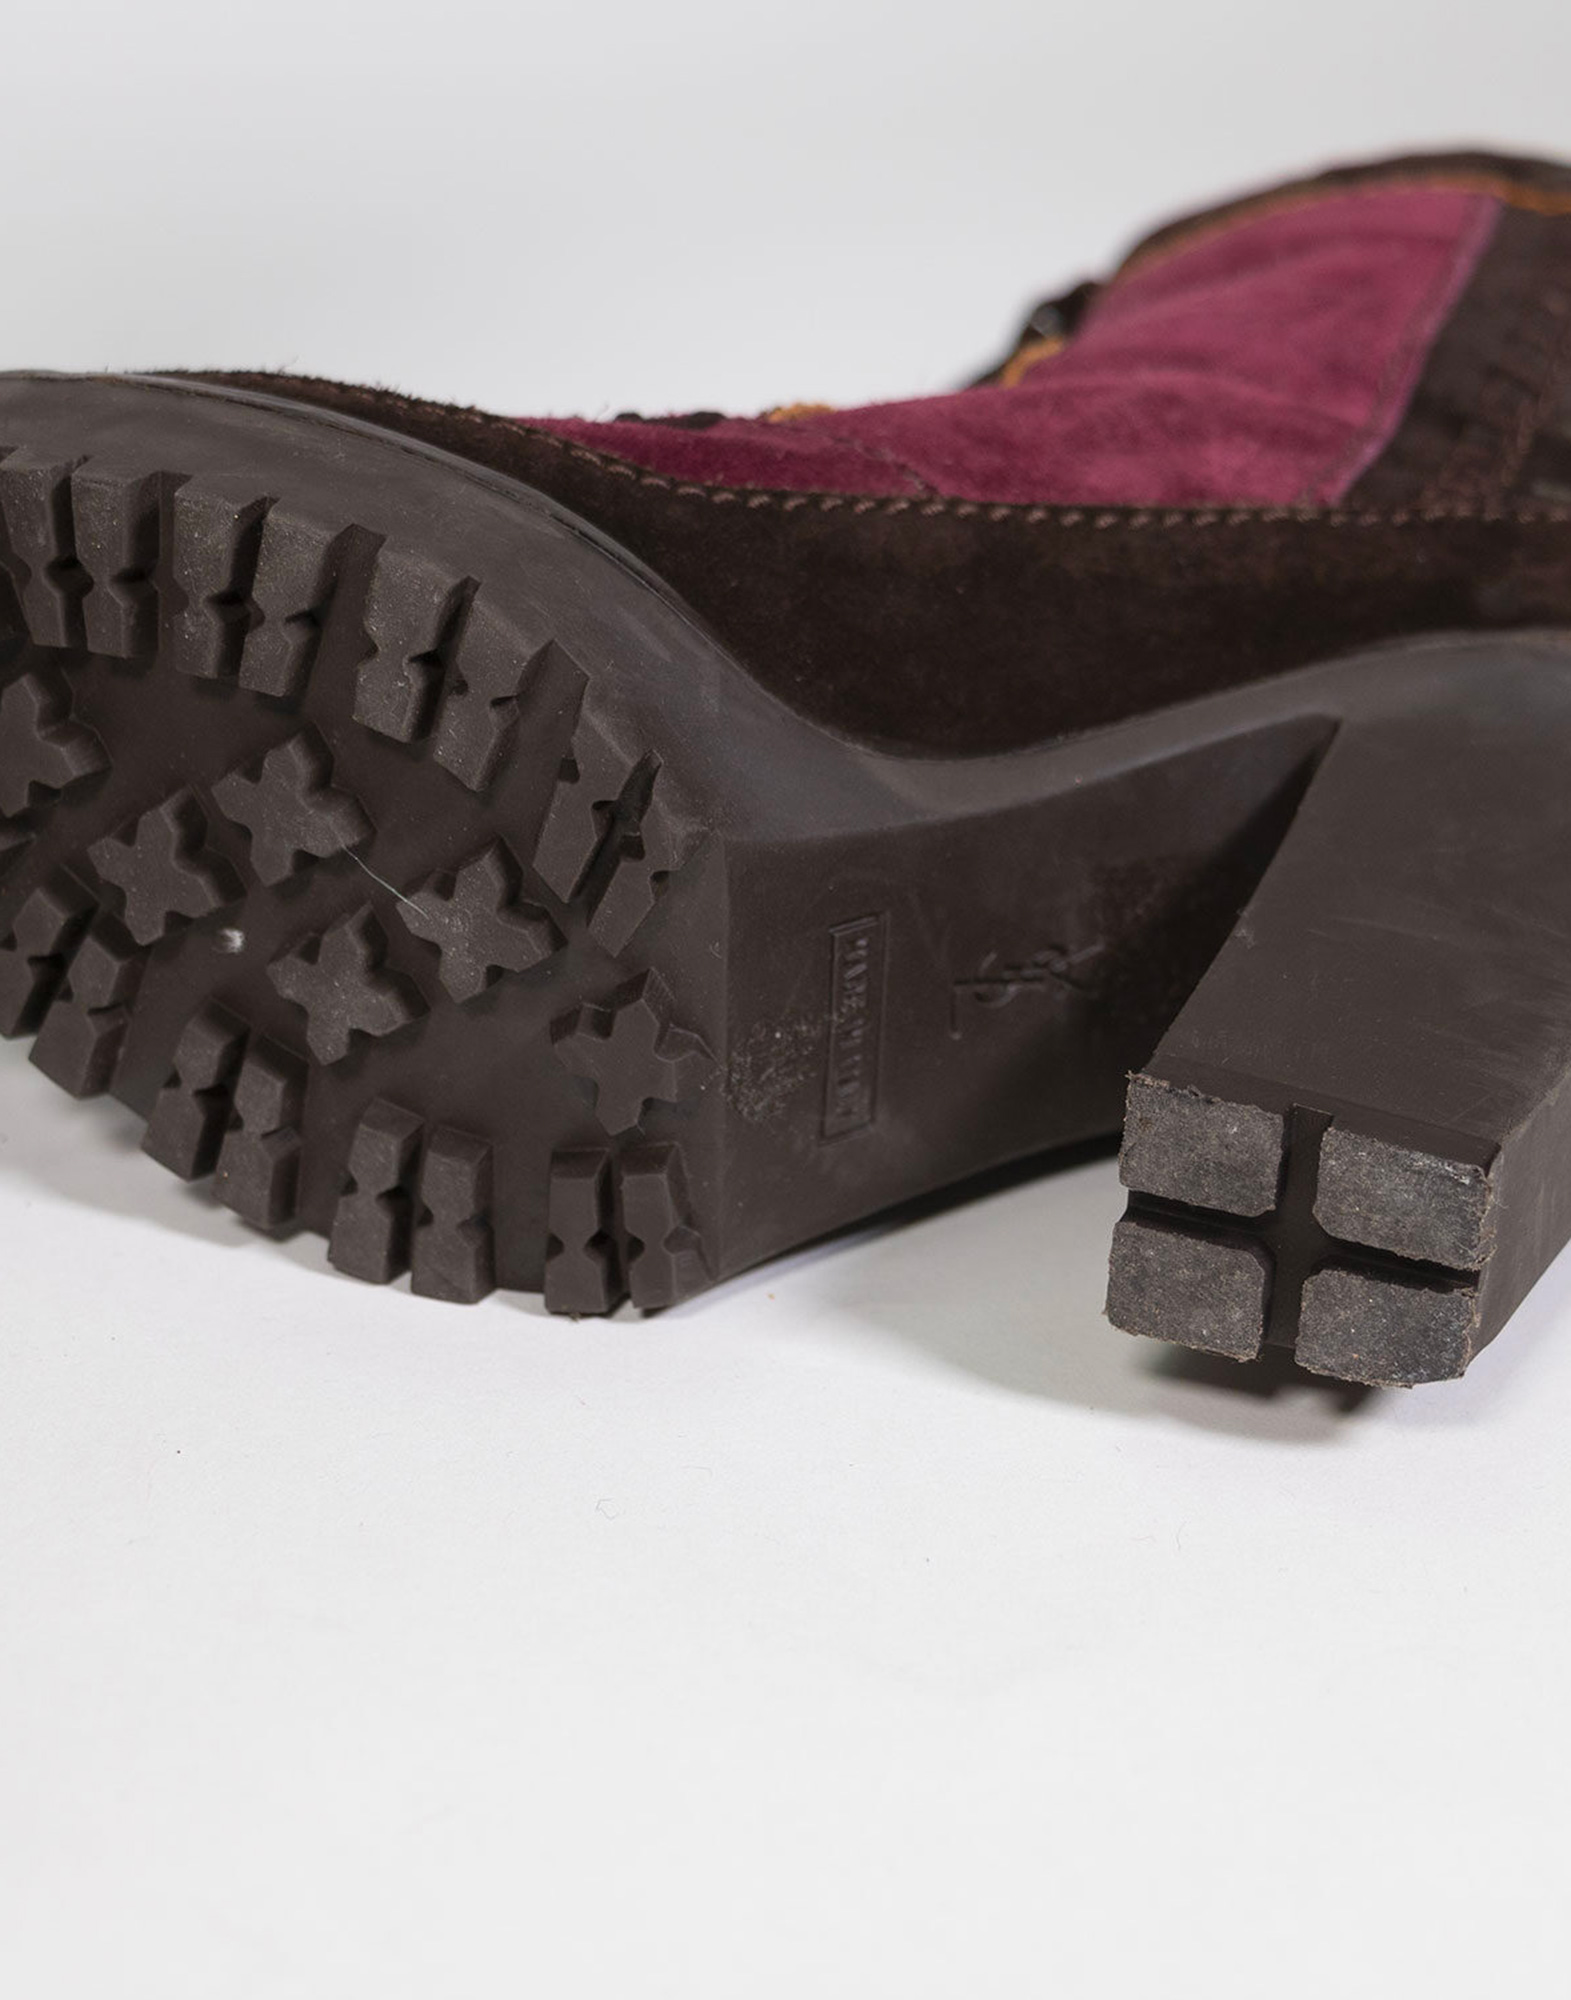 Yves Saint Laurent - Stivali in camoscio con tacco